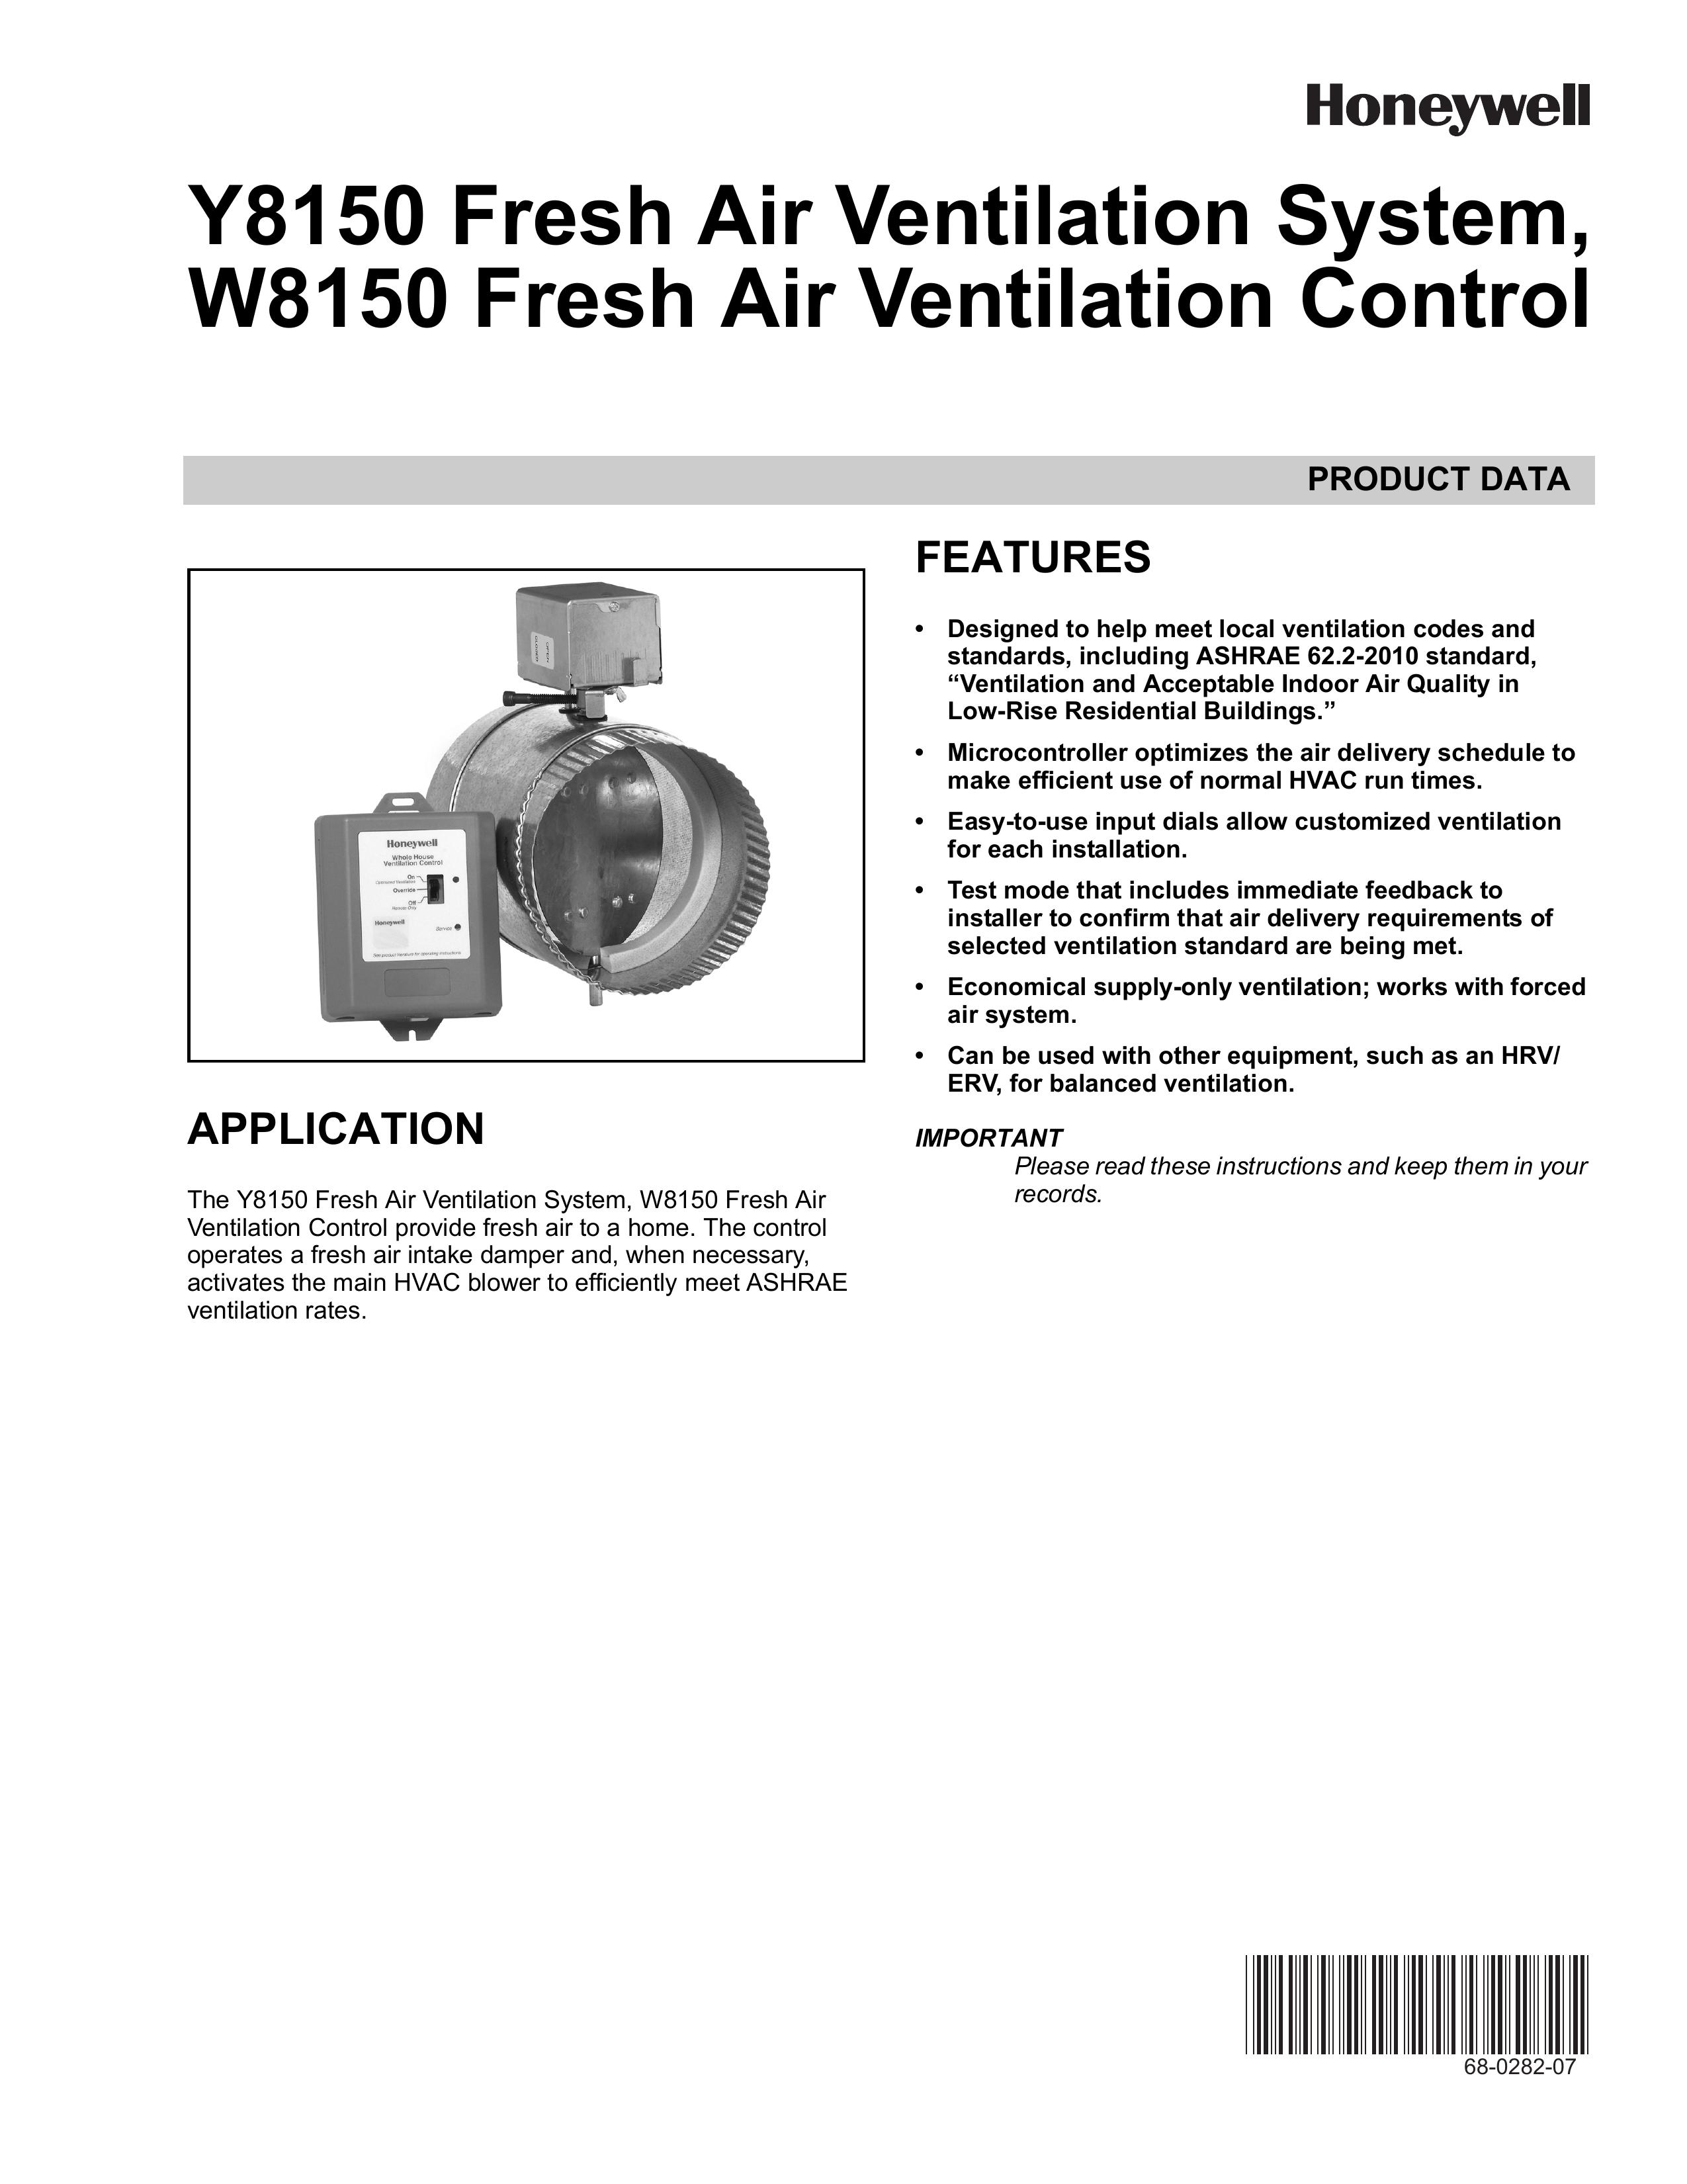 Honeywell Y8150 Ventilation Hood User Manual